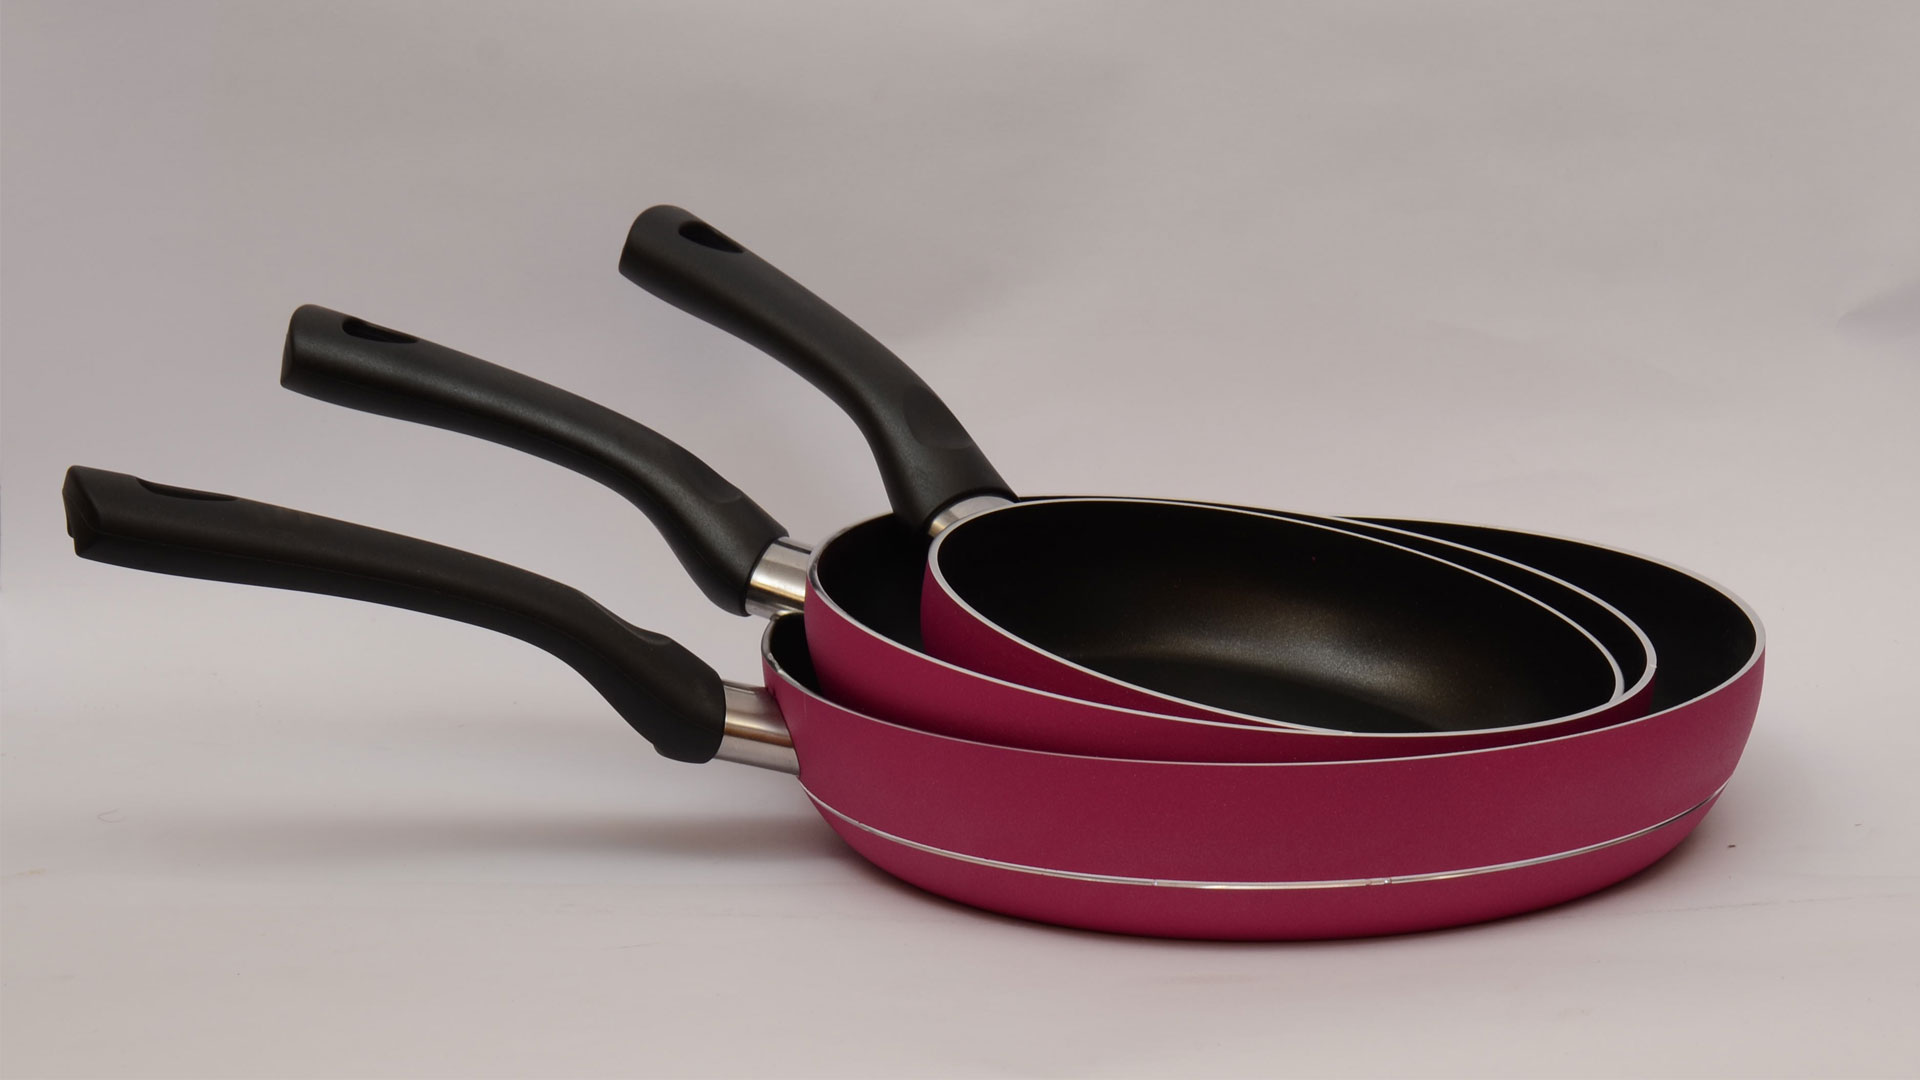 Martef Tefal Frying pan set of 3#snb-400#